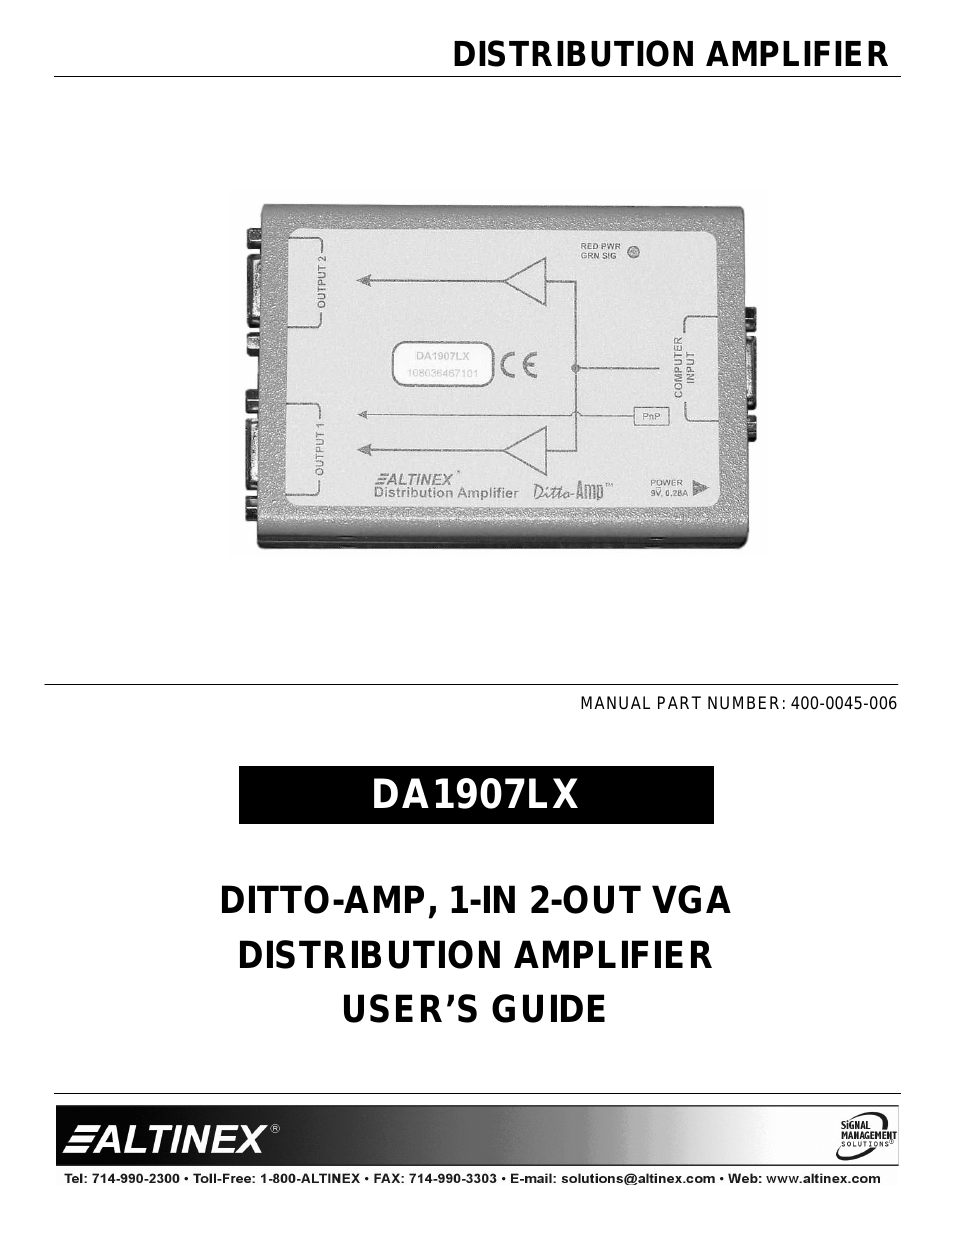 1-In 2-Out VGA Distribution Amplifier DA1907LX